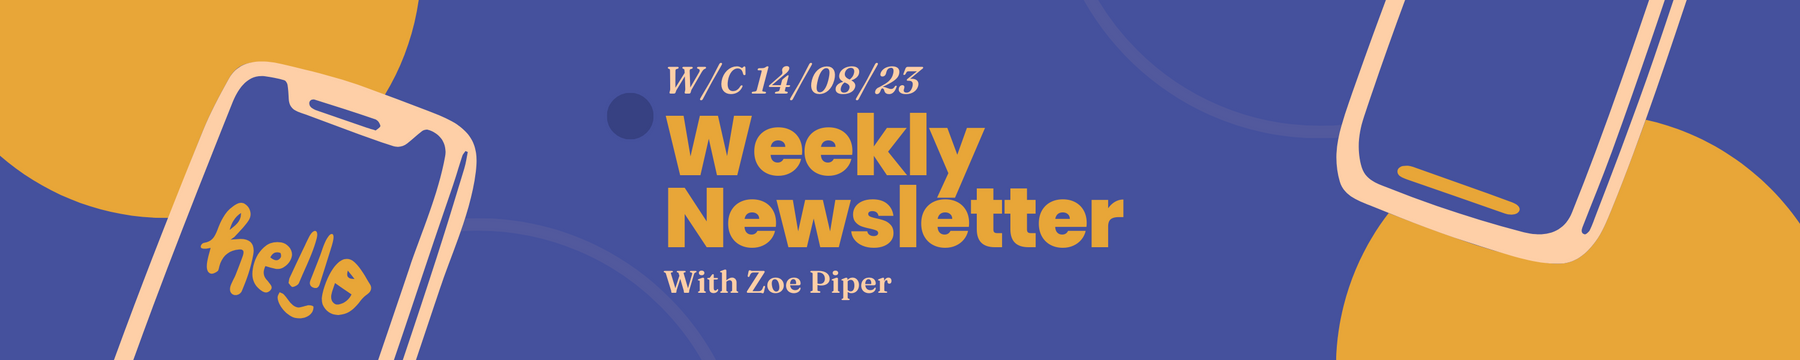 Weekly Newsletter W/C 14/08/23